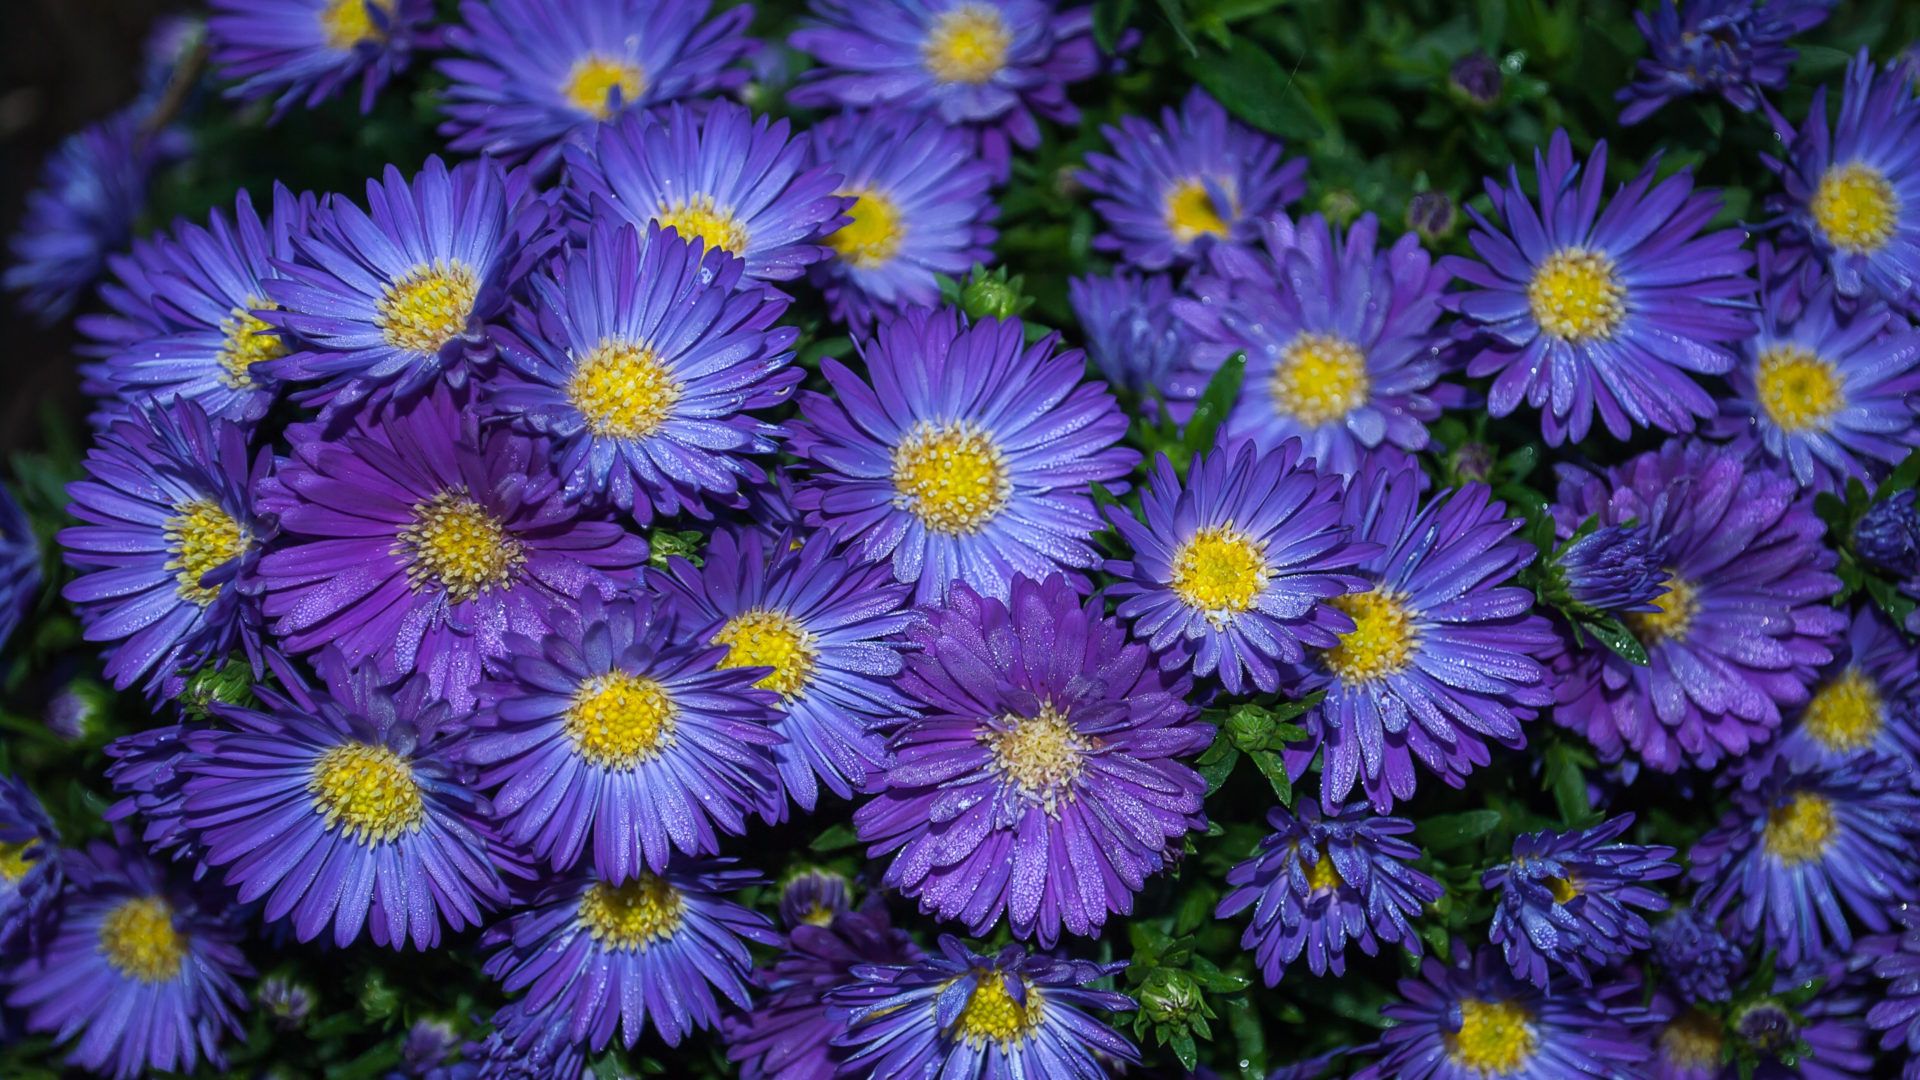 Plants Aster Decorative Purple Flower Desktop HD Wallpaper For Pc Tablet And Mobile Download 3840x2400, Wallpaper13.com